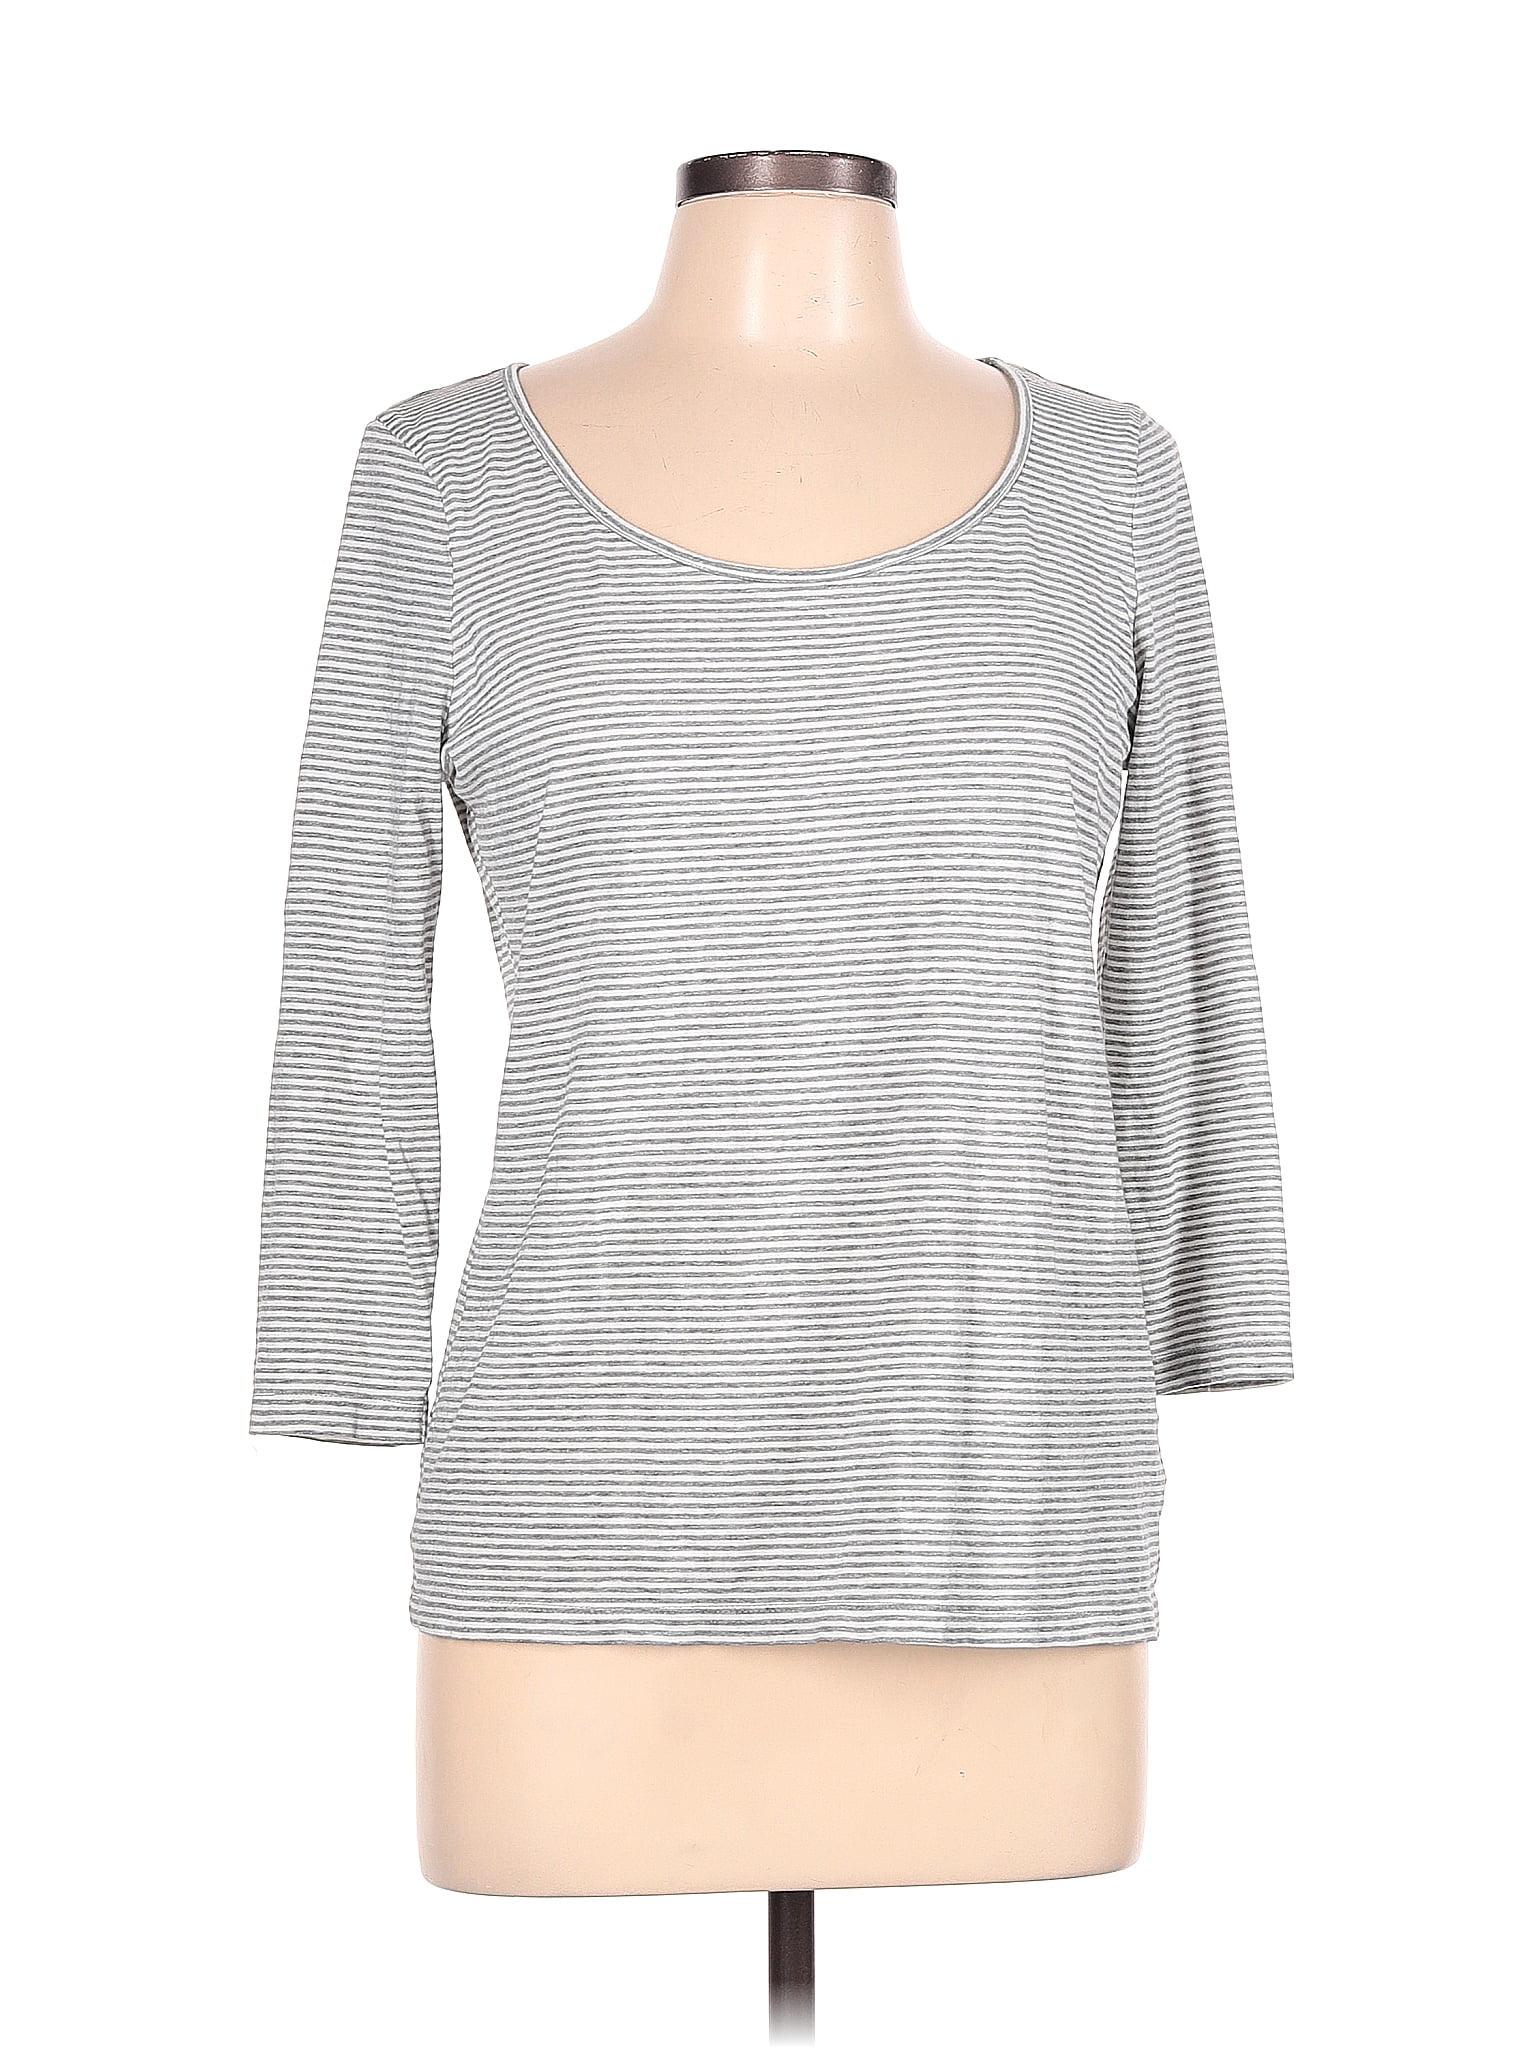 Talbots 100% Cotton Color Block Gray Long Sleeve T-Shirt Size L - 77% ...